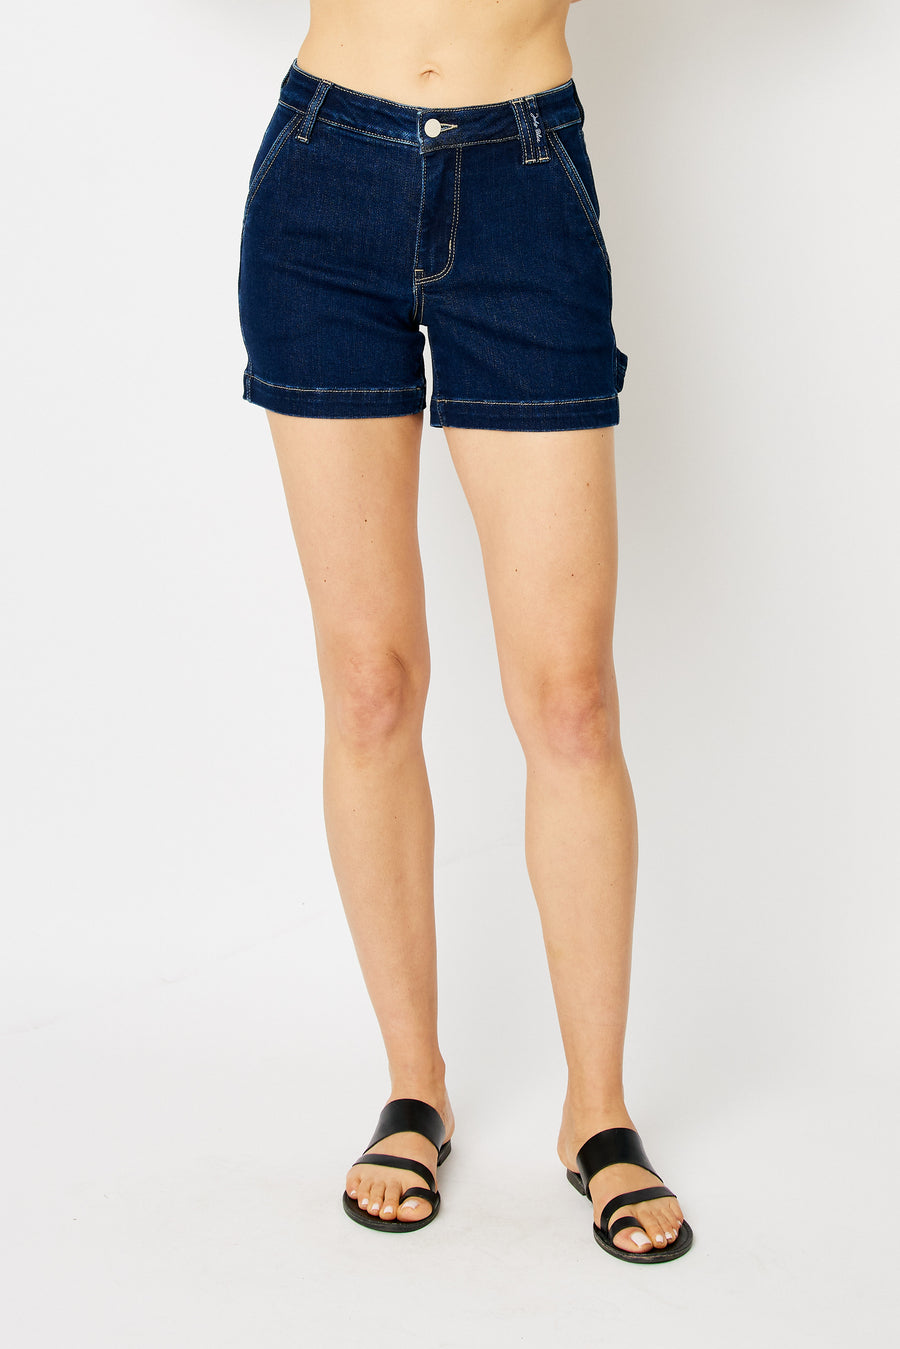 Sabrina | Midrise Classic Carpenter Shorts (Judy Blue Style 150243)